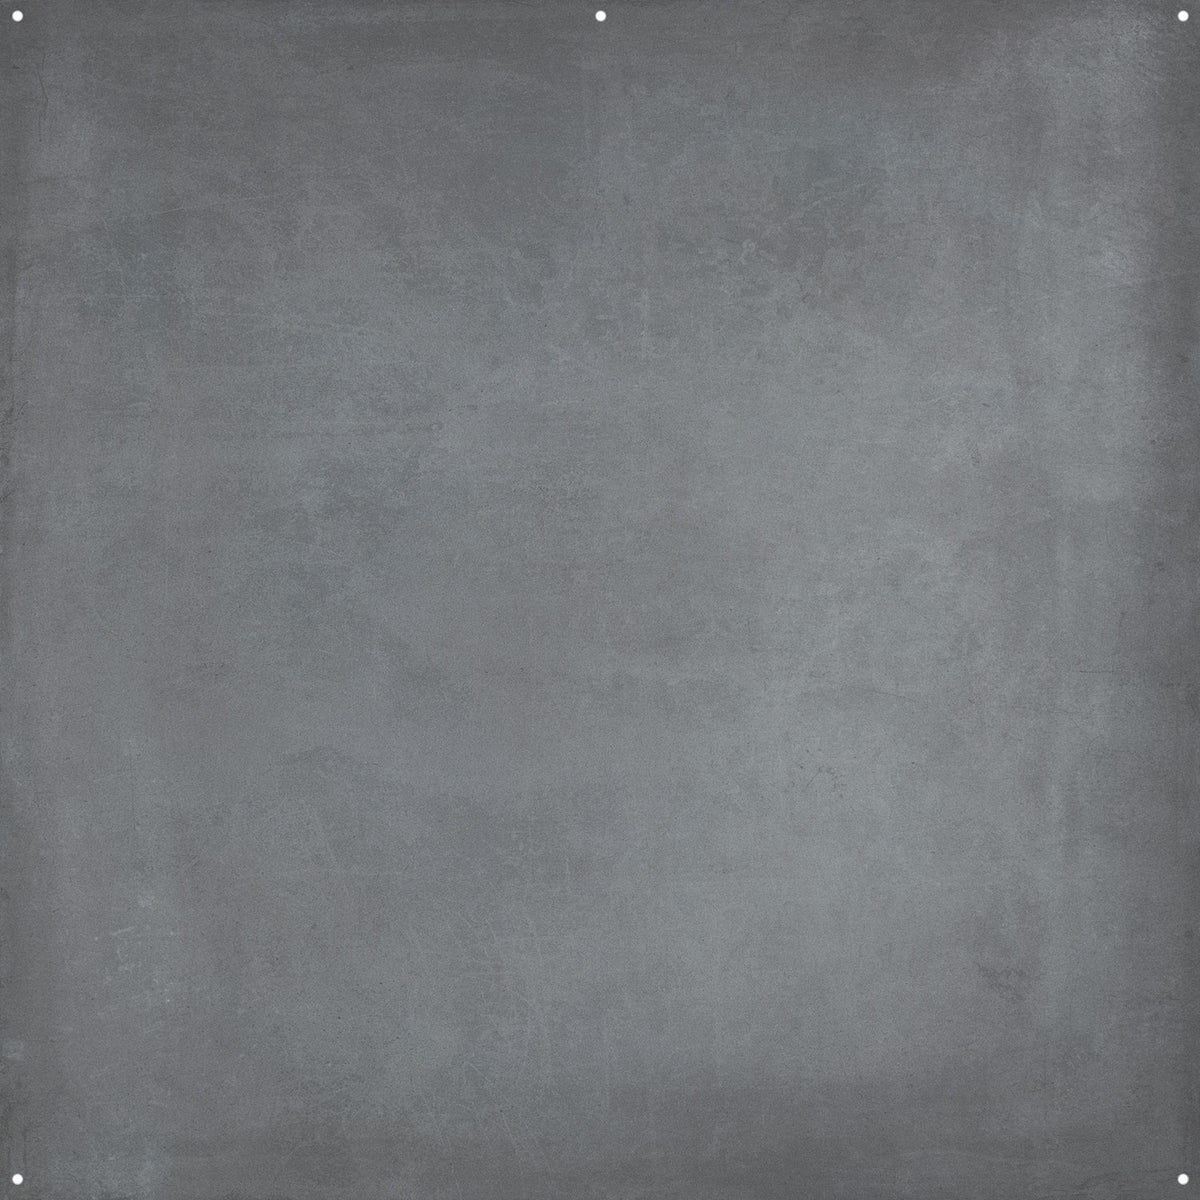 X-Drop Pro Fabric Backdrop -  Smooth Concrete by Joel Grimes (8' x 8')